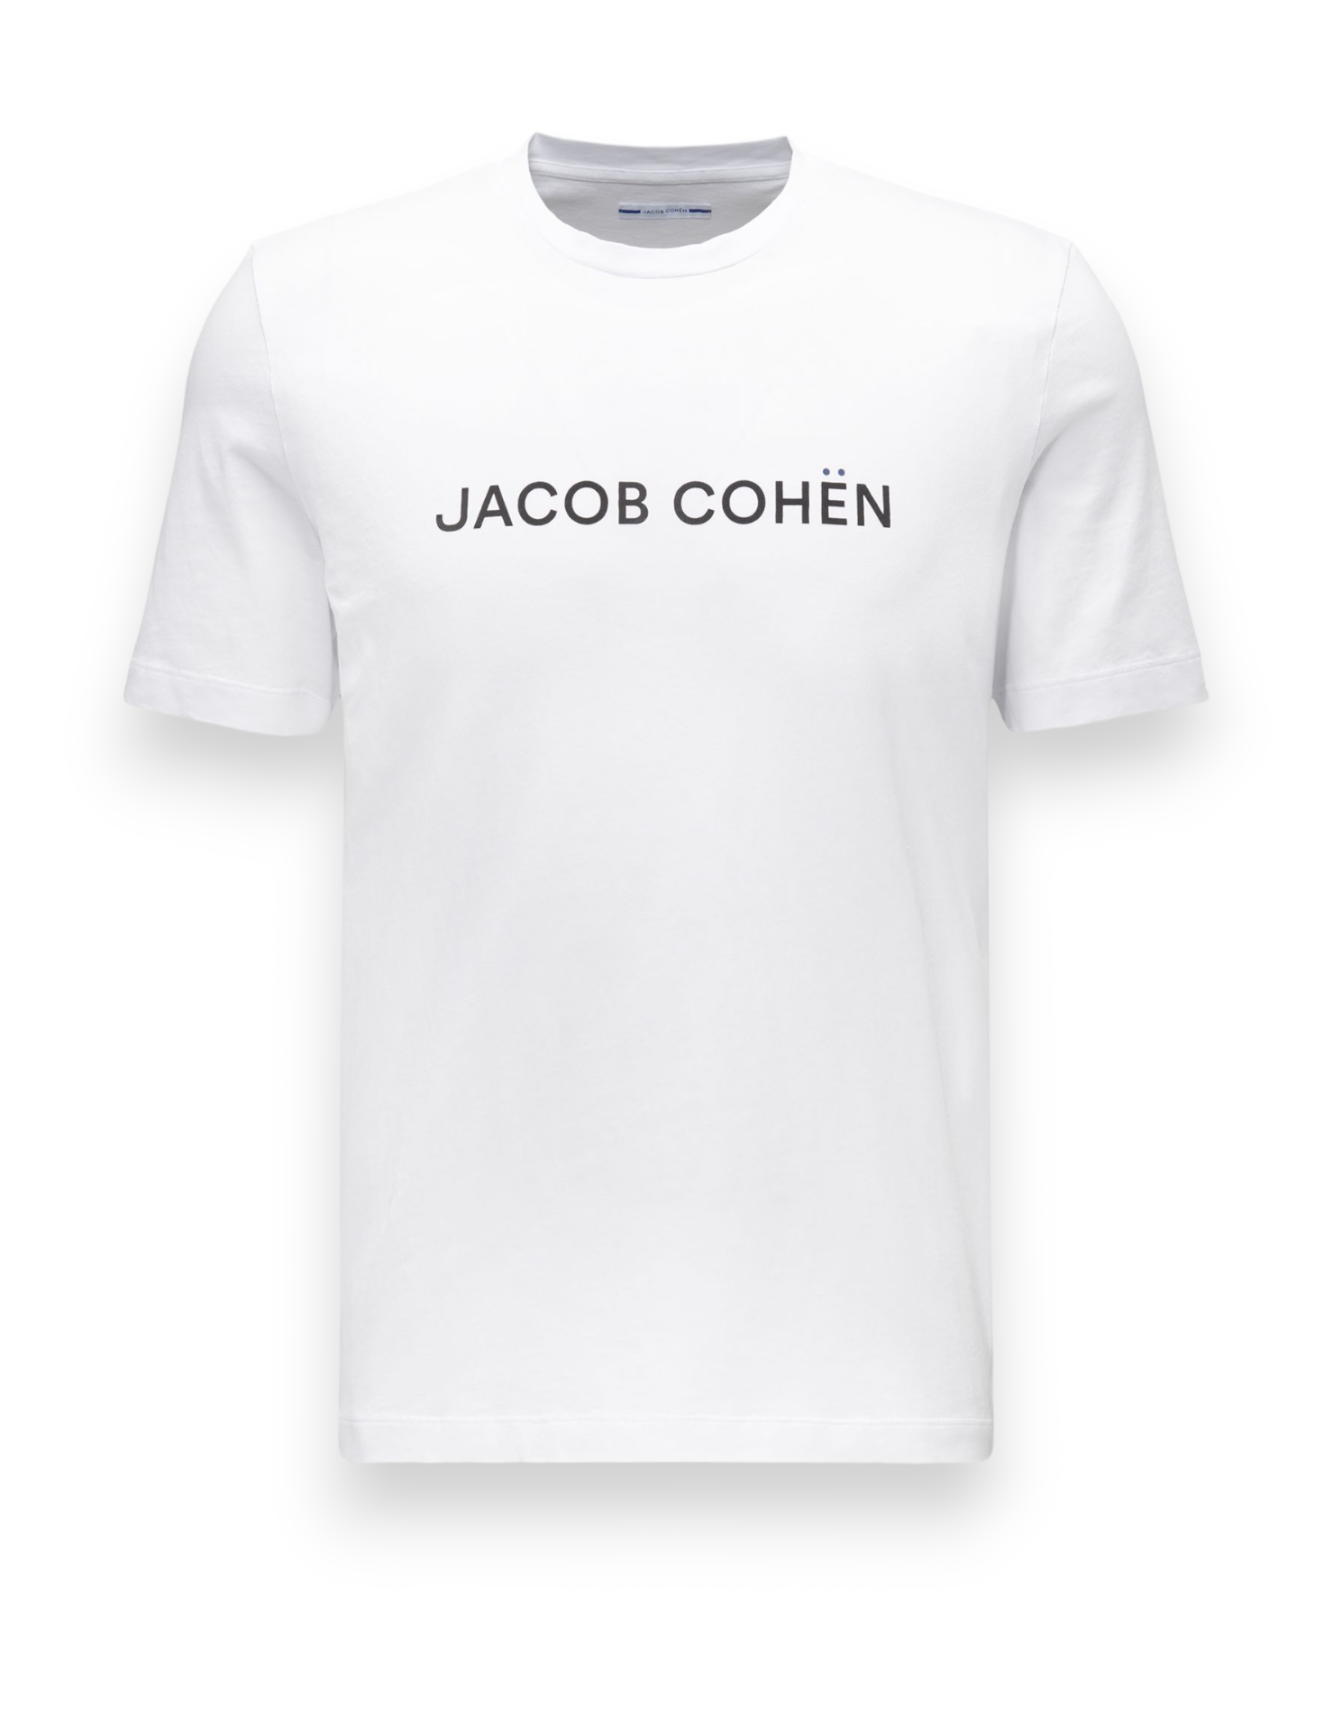 Jacob Cohën Men's Logo Print T-Shirt White - Front View